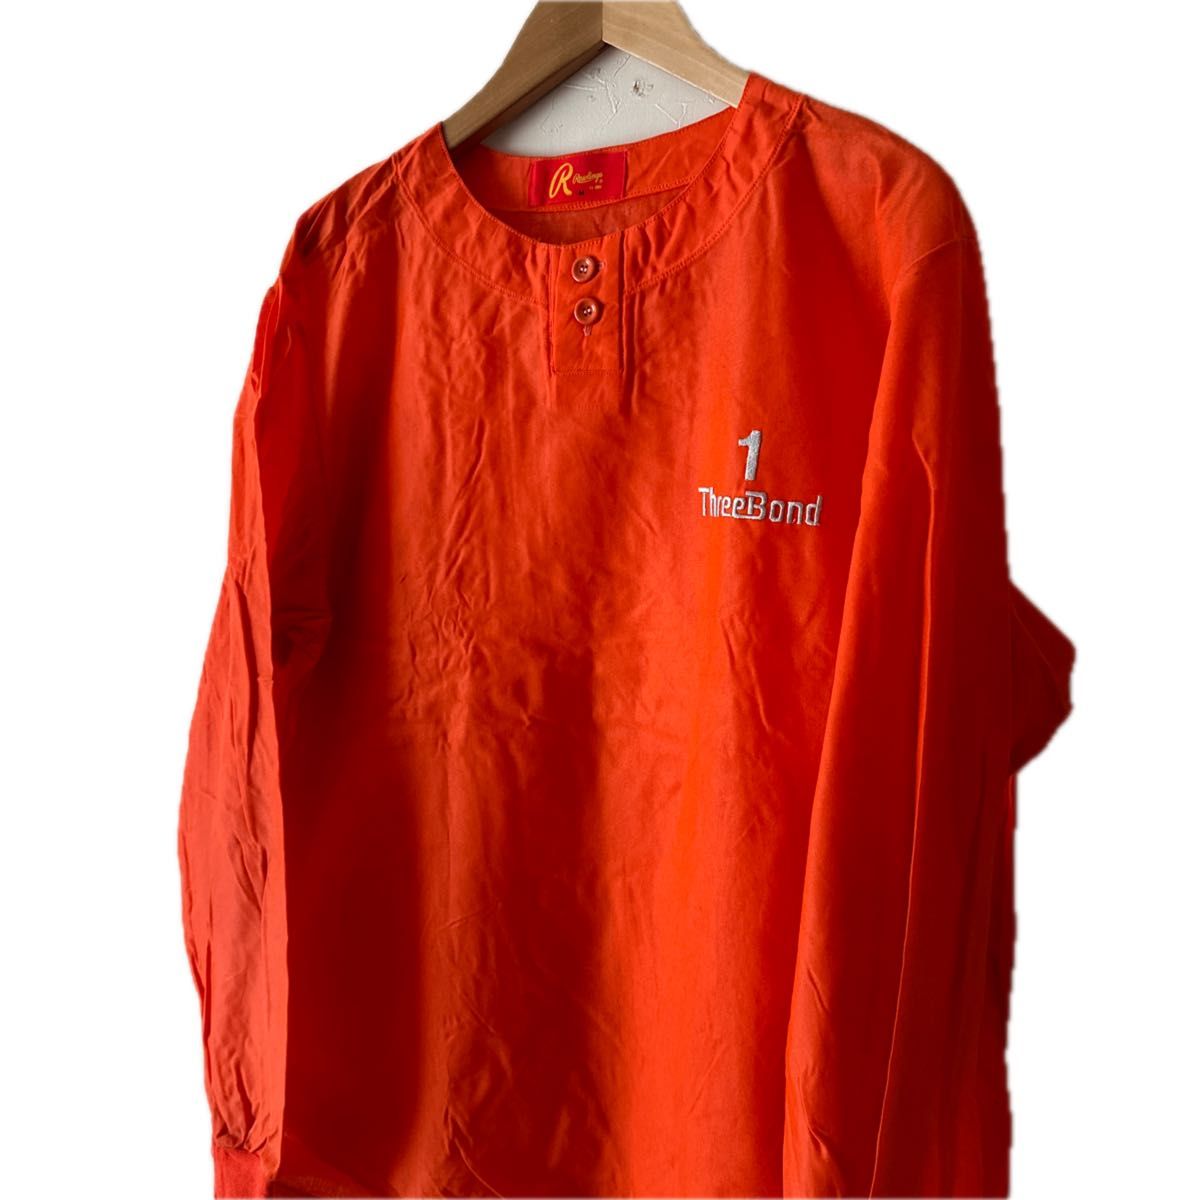 Rawlings ローリングス メンズベースボールアップシャツ USED M オレンジ